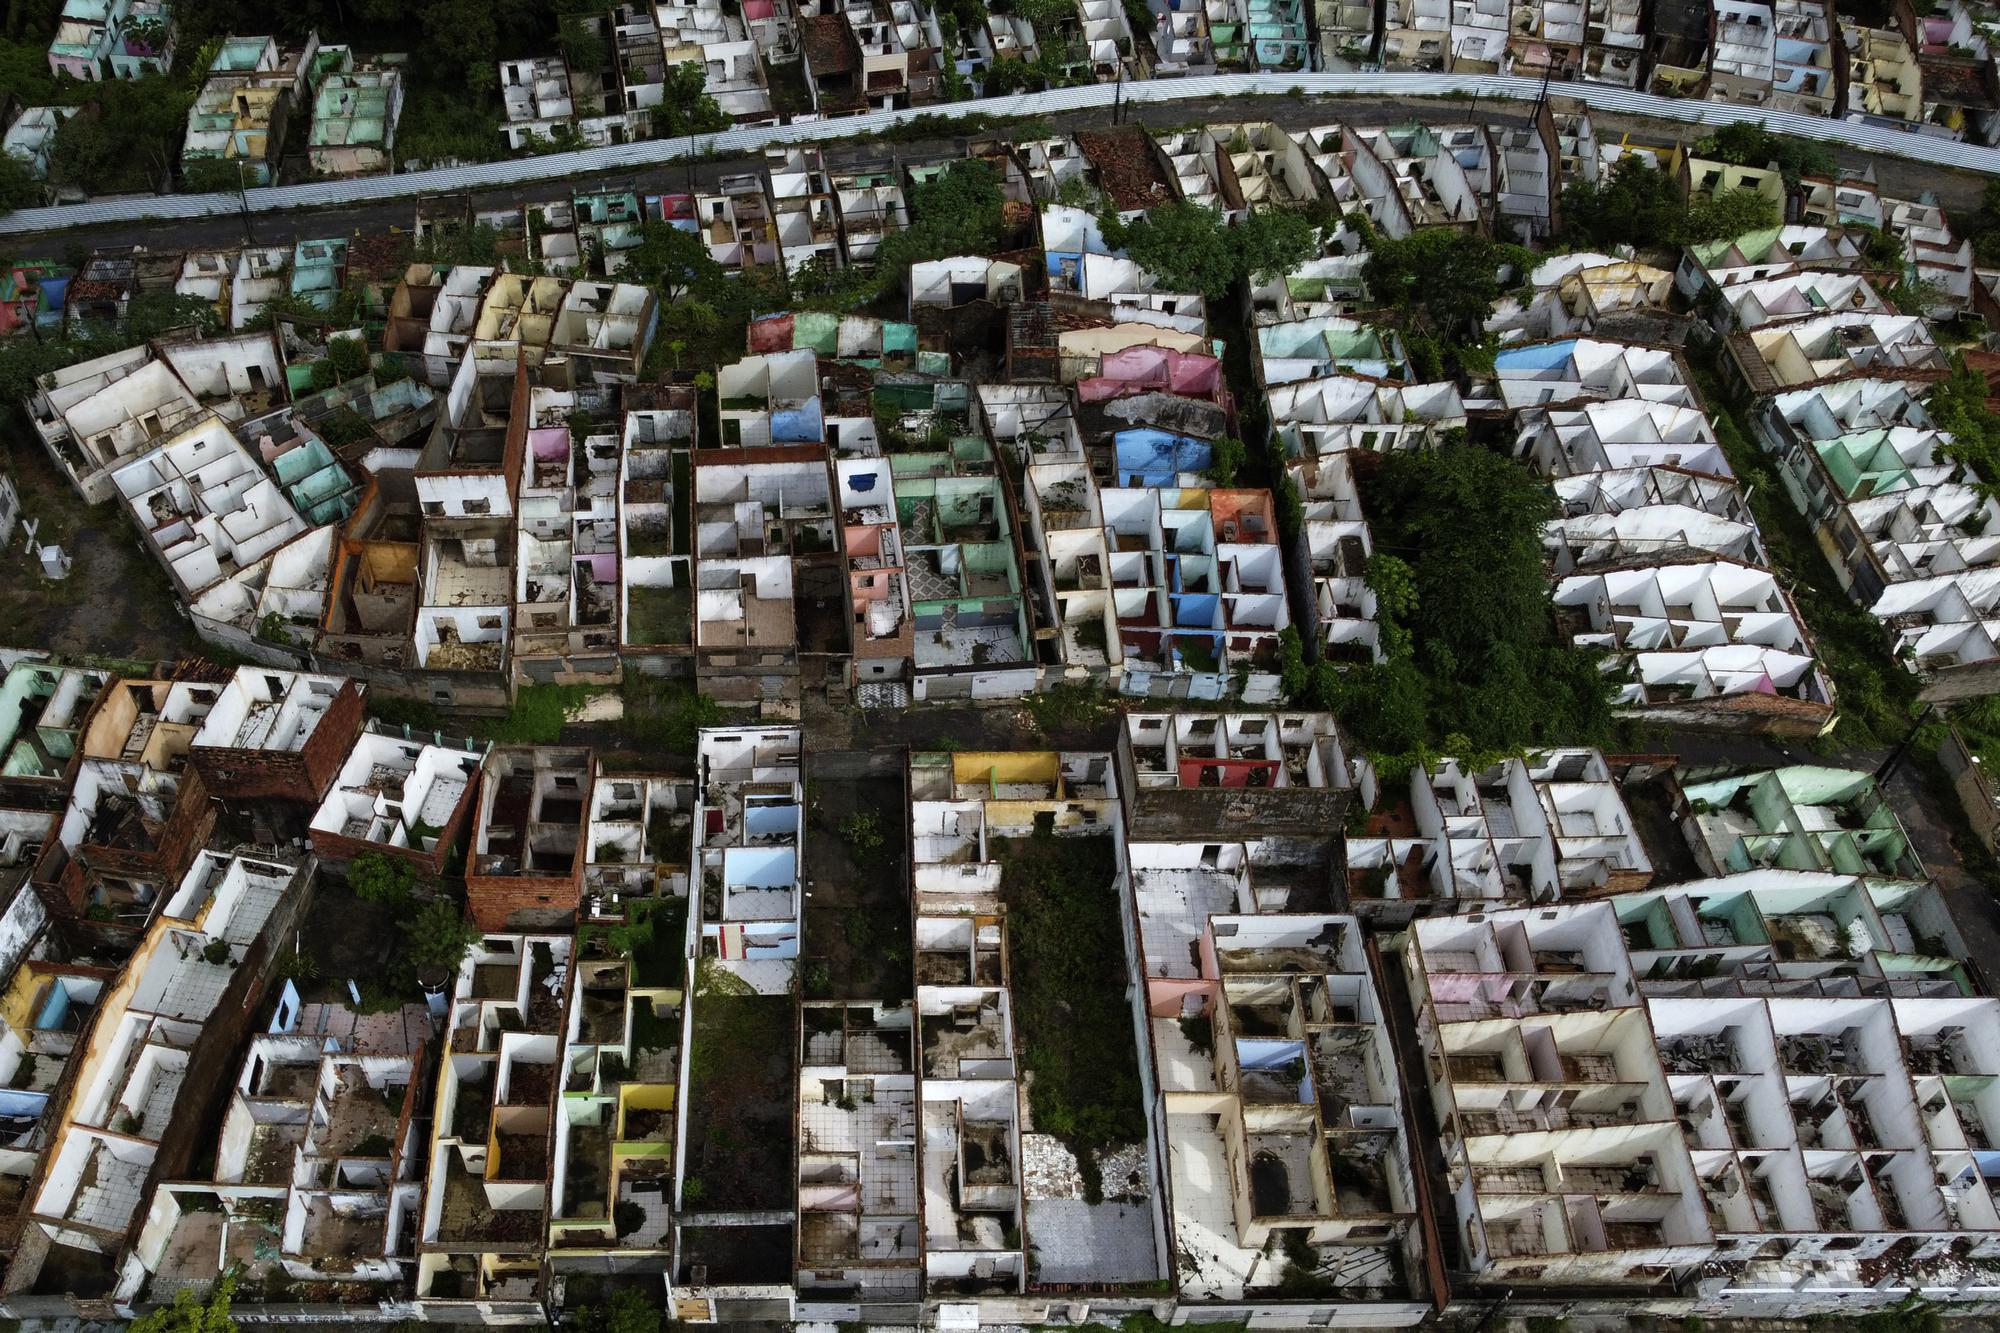 Urban Mining Transforms Brazil Neighborhoods into Ghost Town